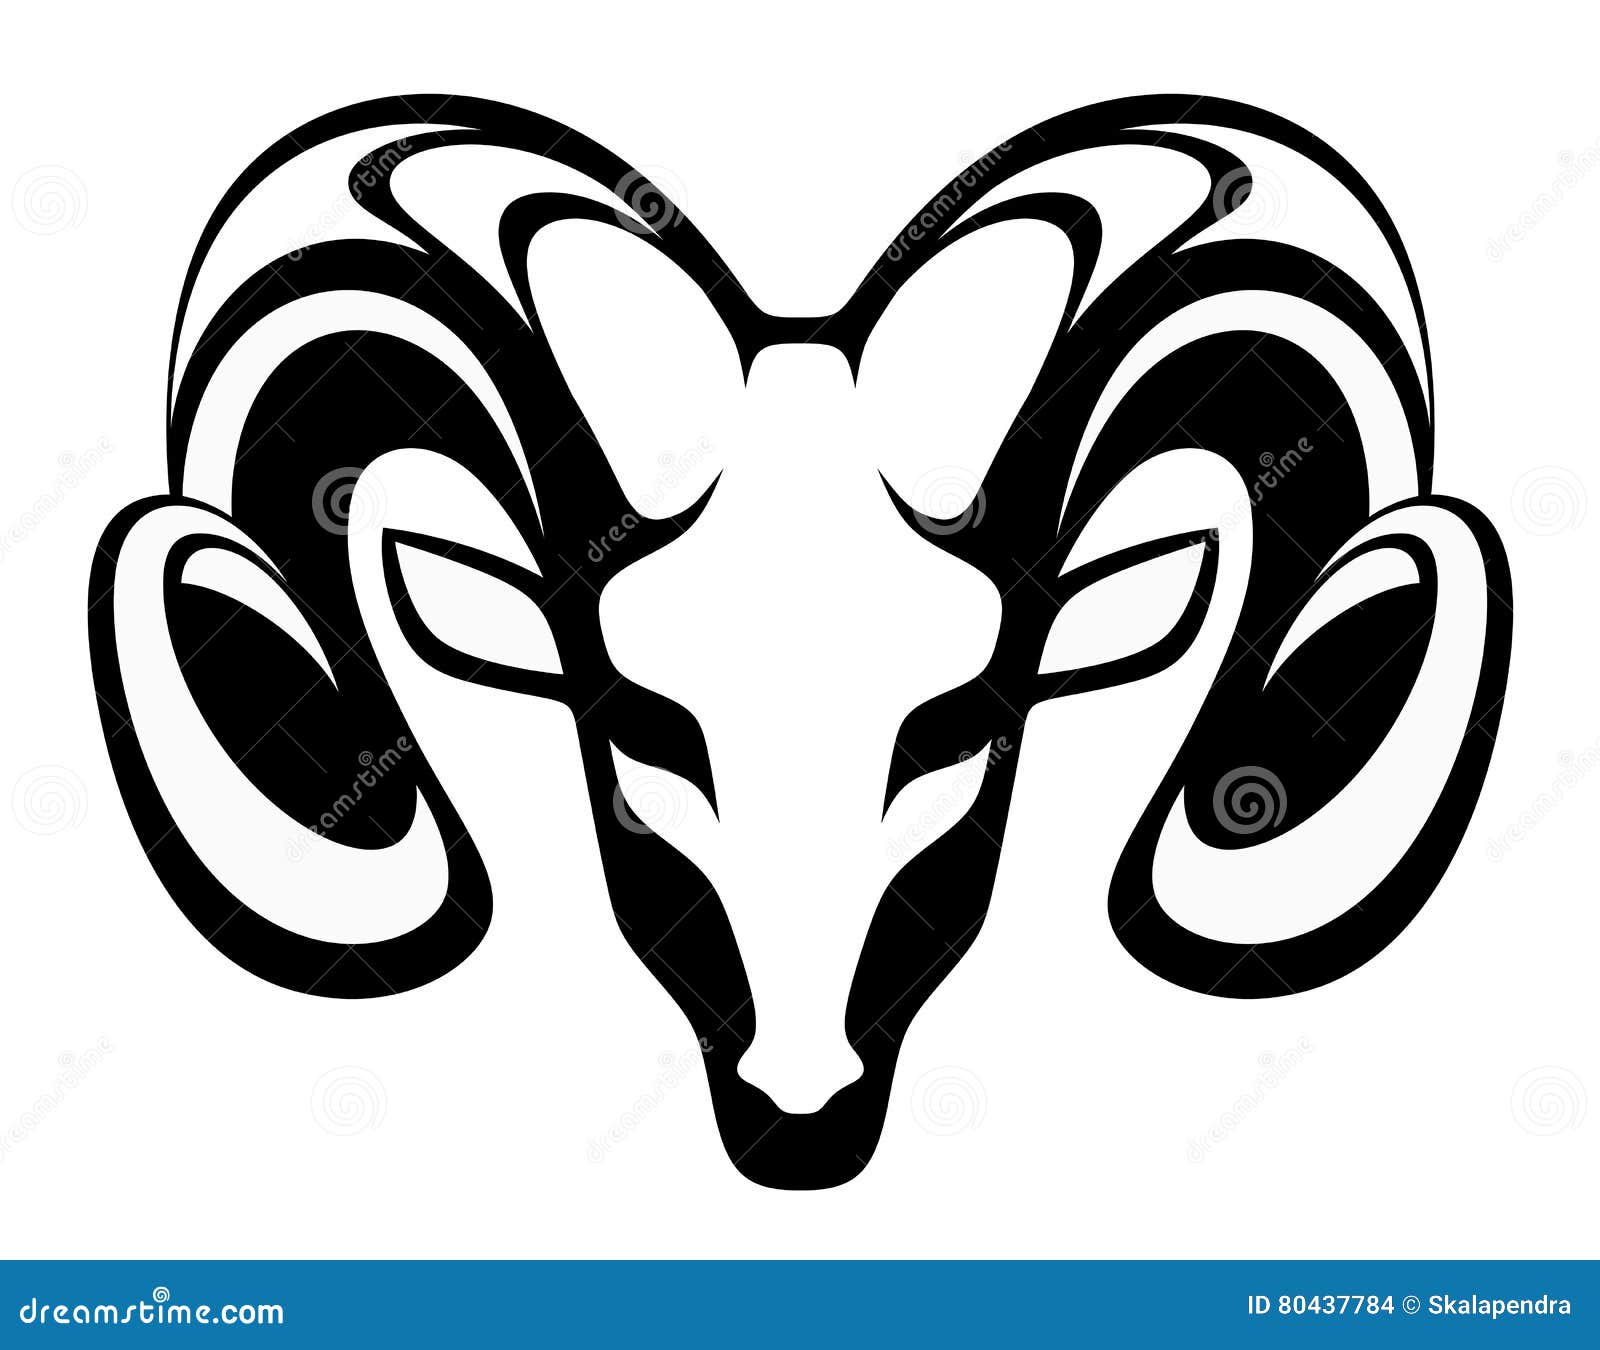 Emblem aries stock vector. Illustration of muzzle, black - 80437784